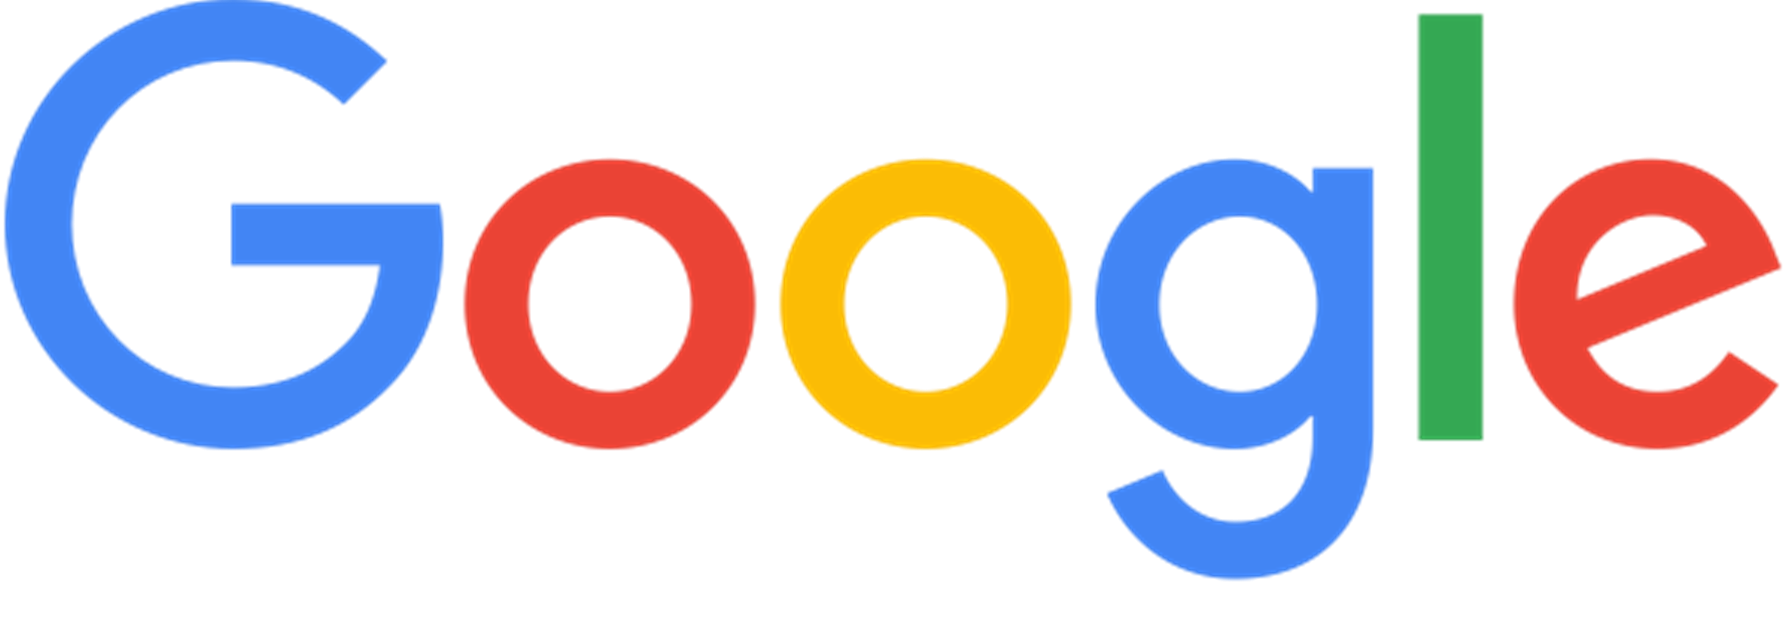 das neue Google-Logo